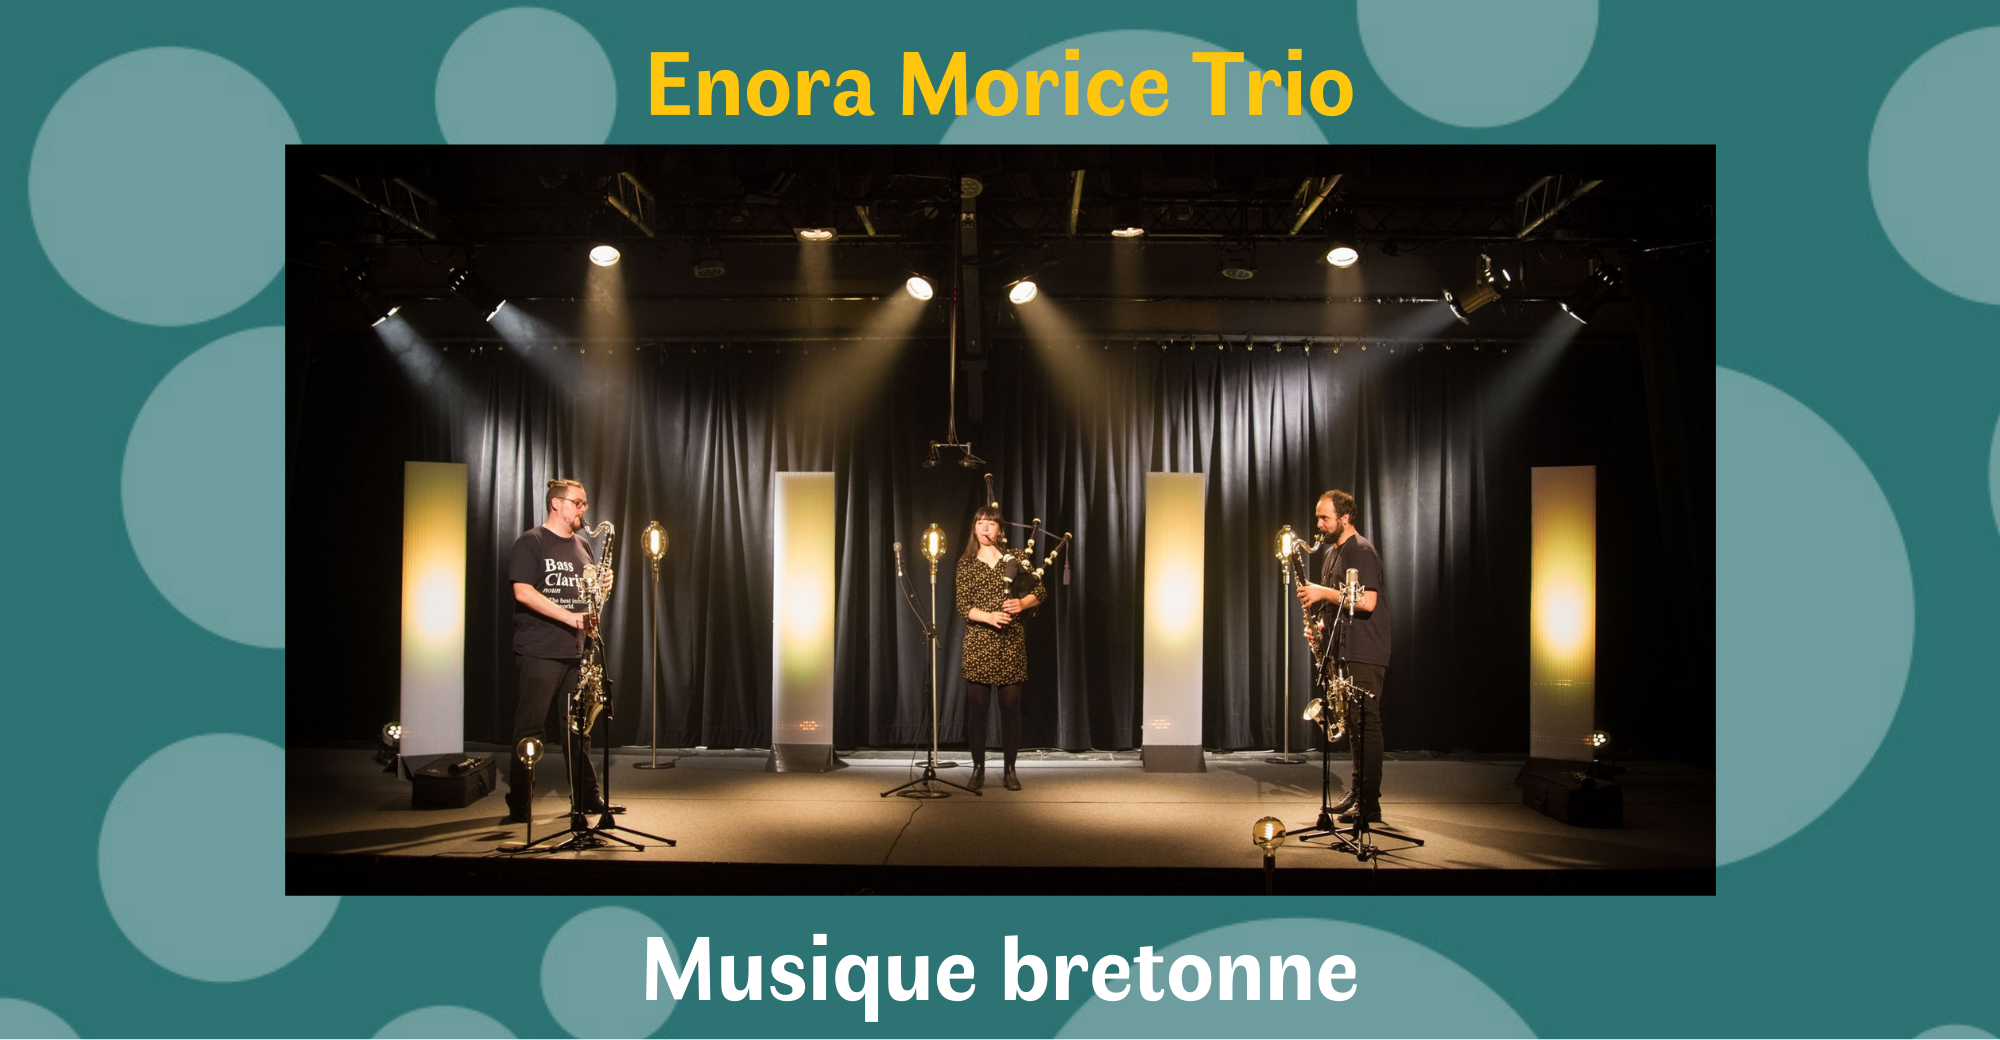 Enora Morice Trio